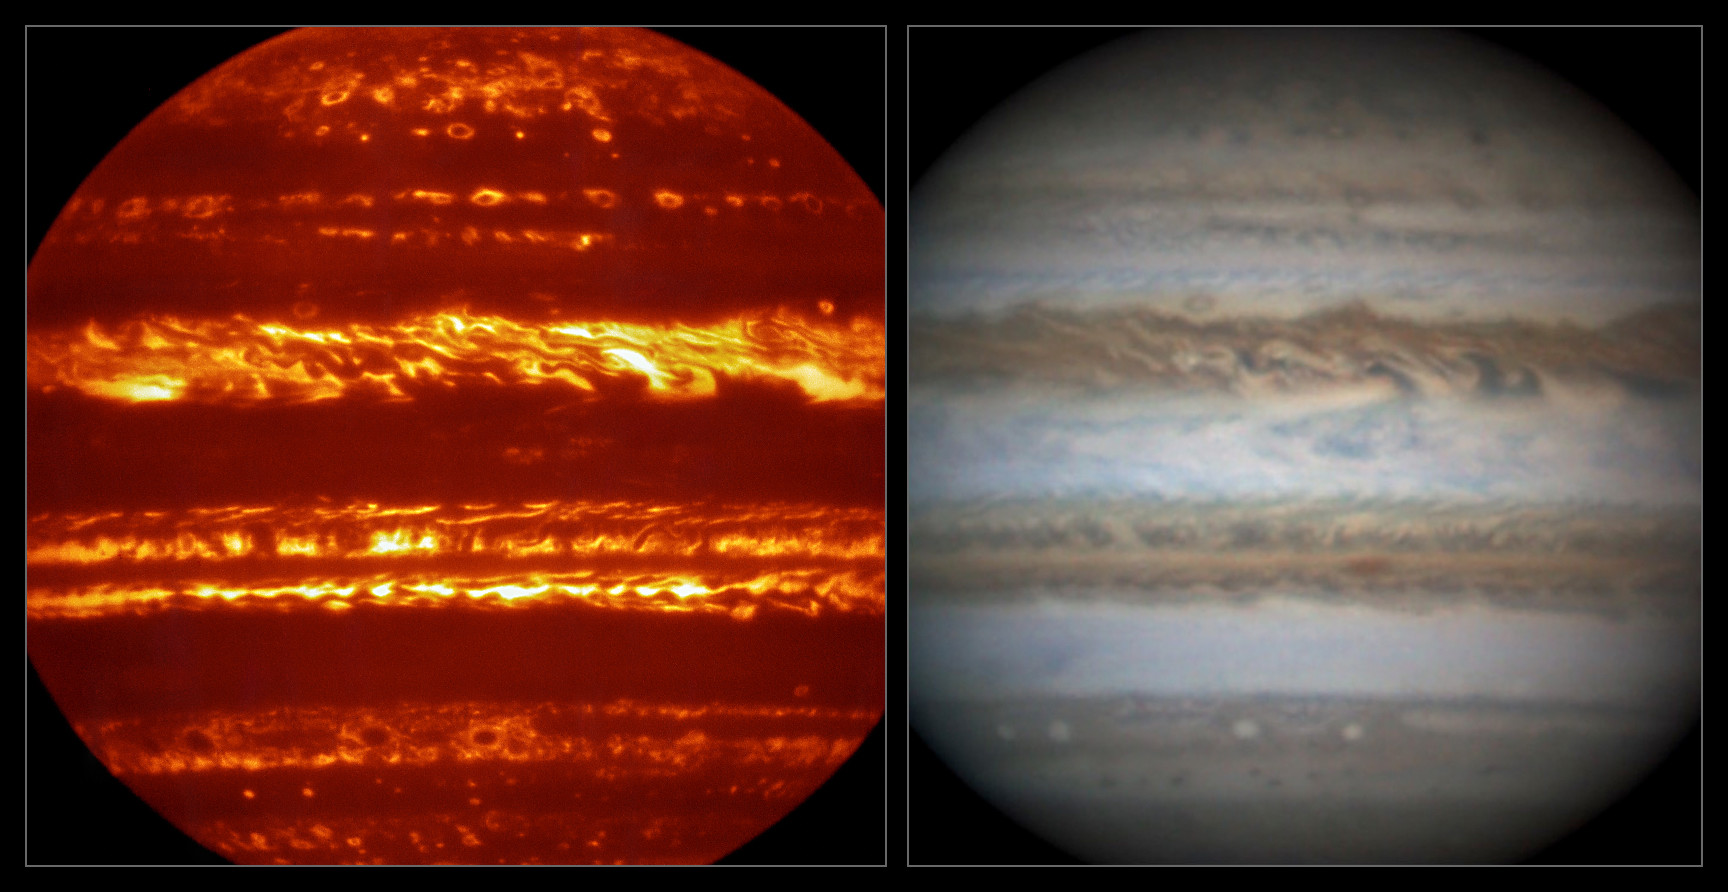 Comparison of VISIR and visible light views of Jupiter